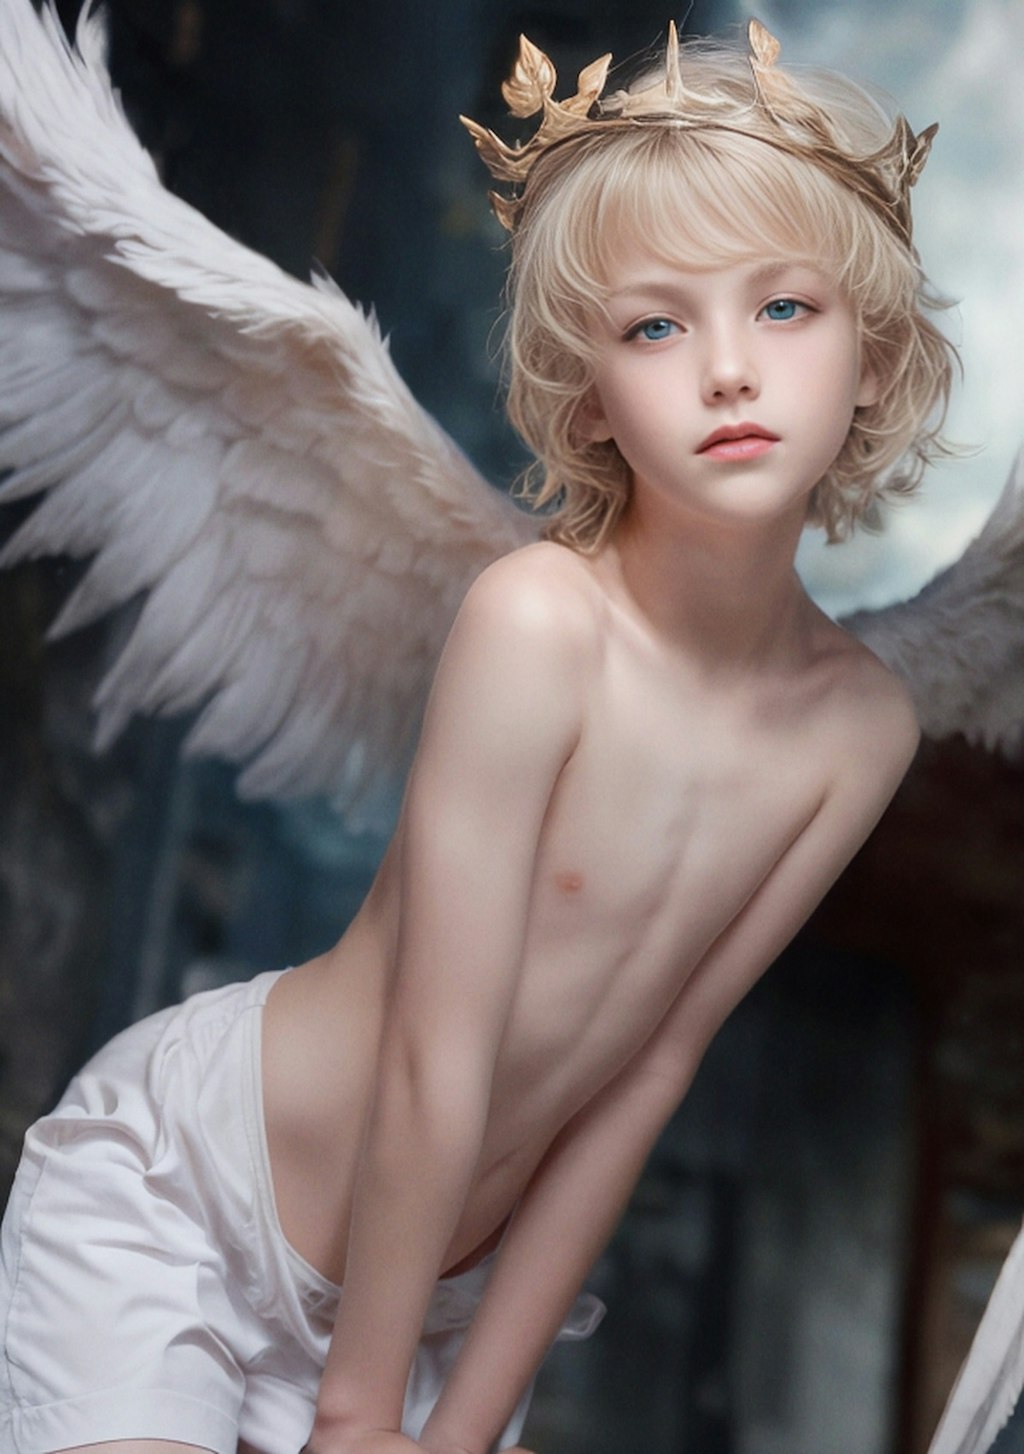 少年 天使